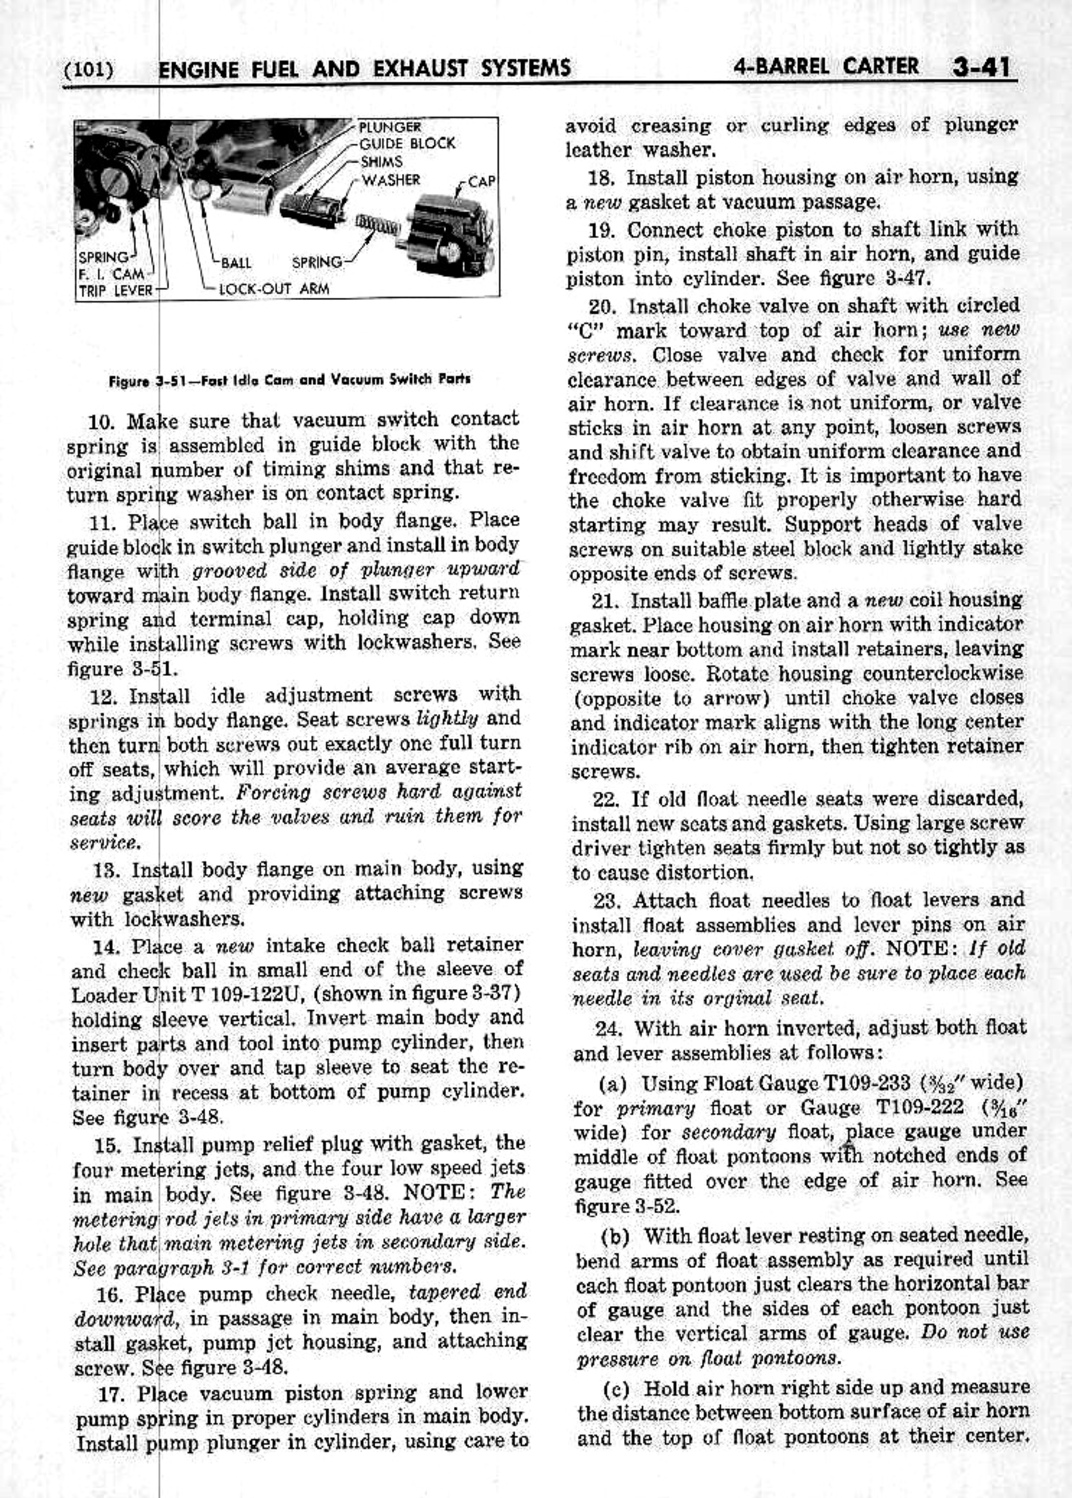 n_04 1953 Buick Shop Manual - Engine Fuel & Exhaust-041-041.jpg